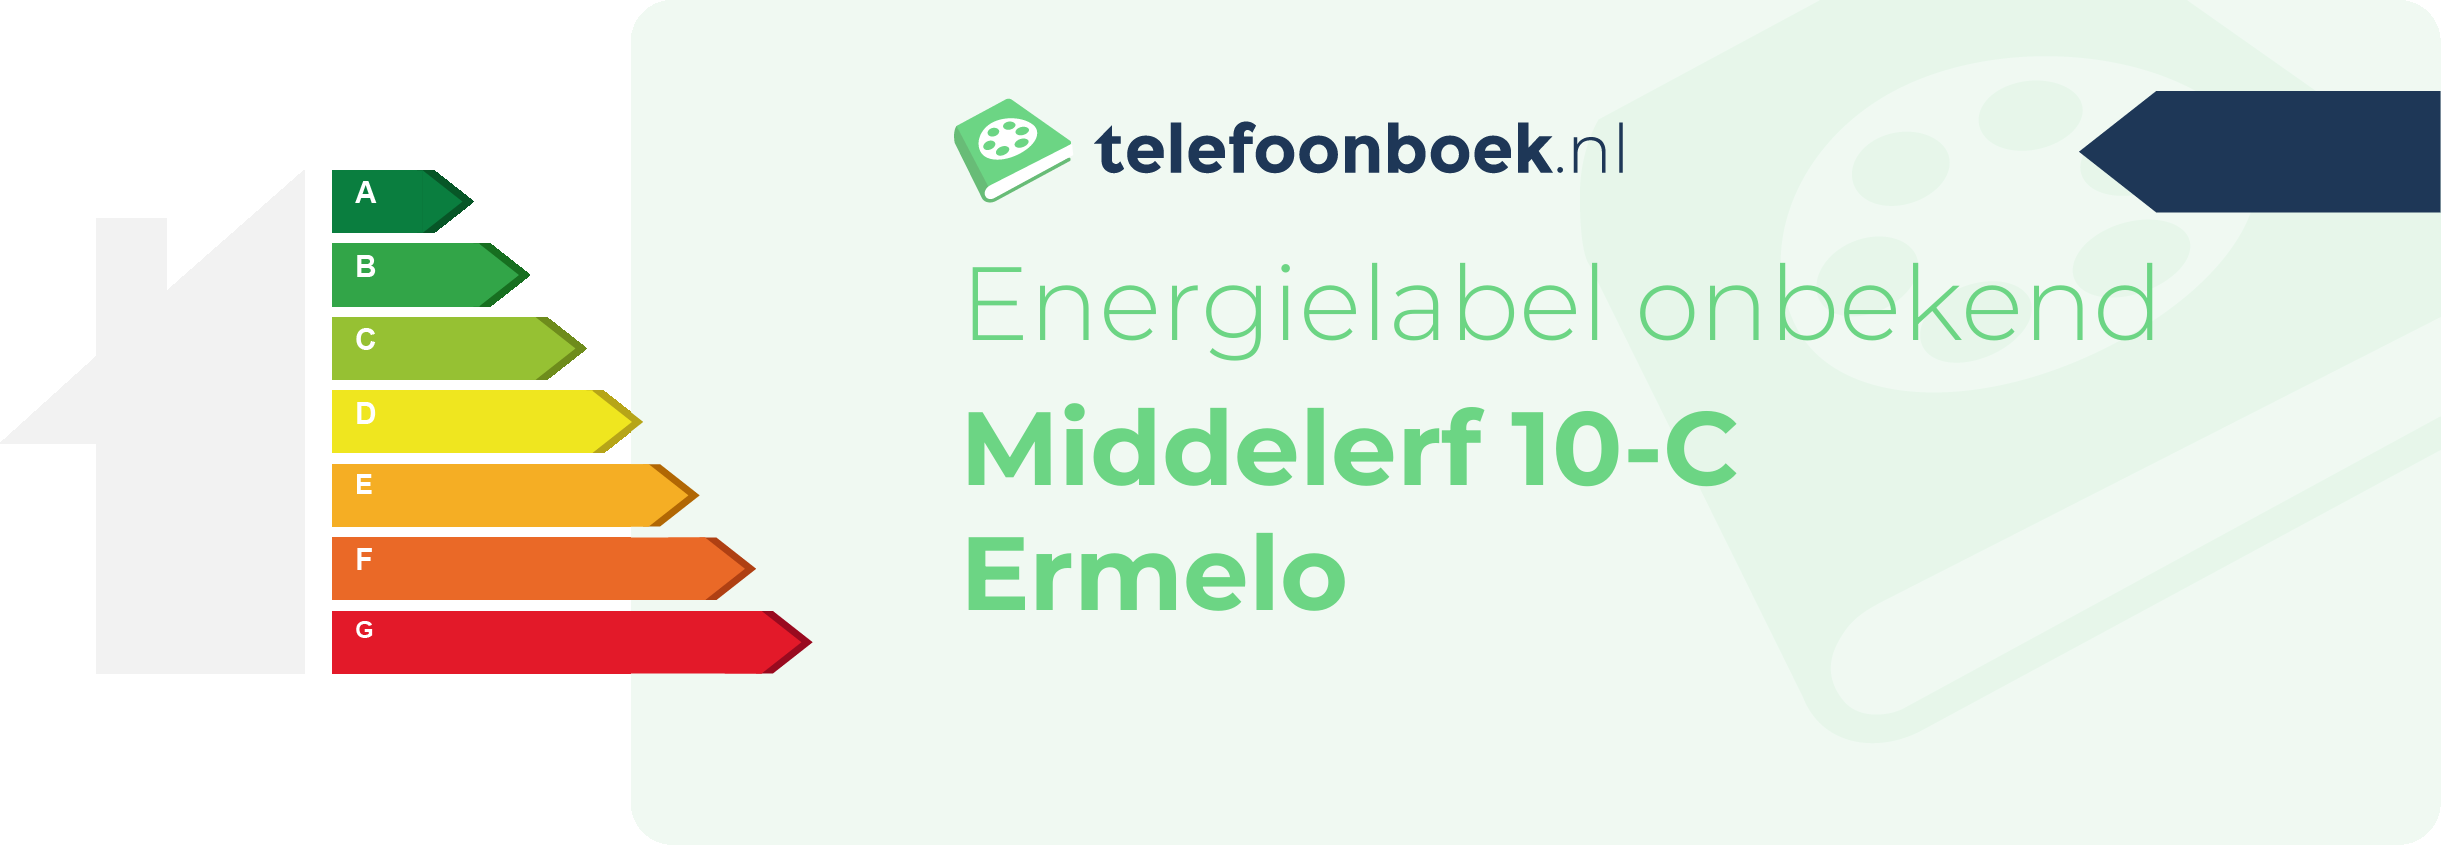 Energielabel Middelerf 10-C Ermelo